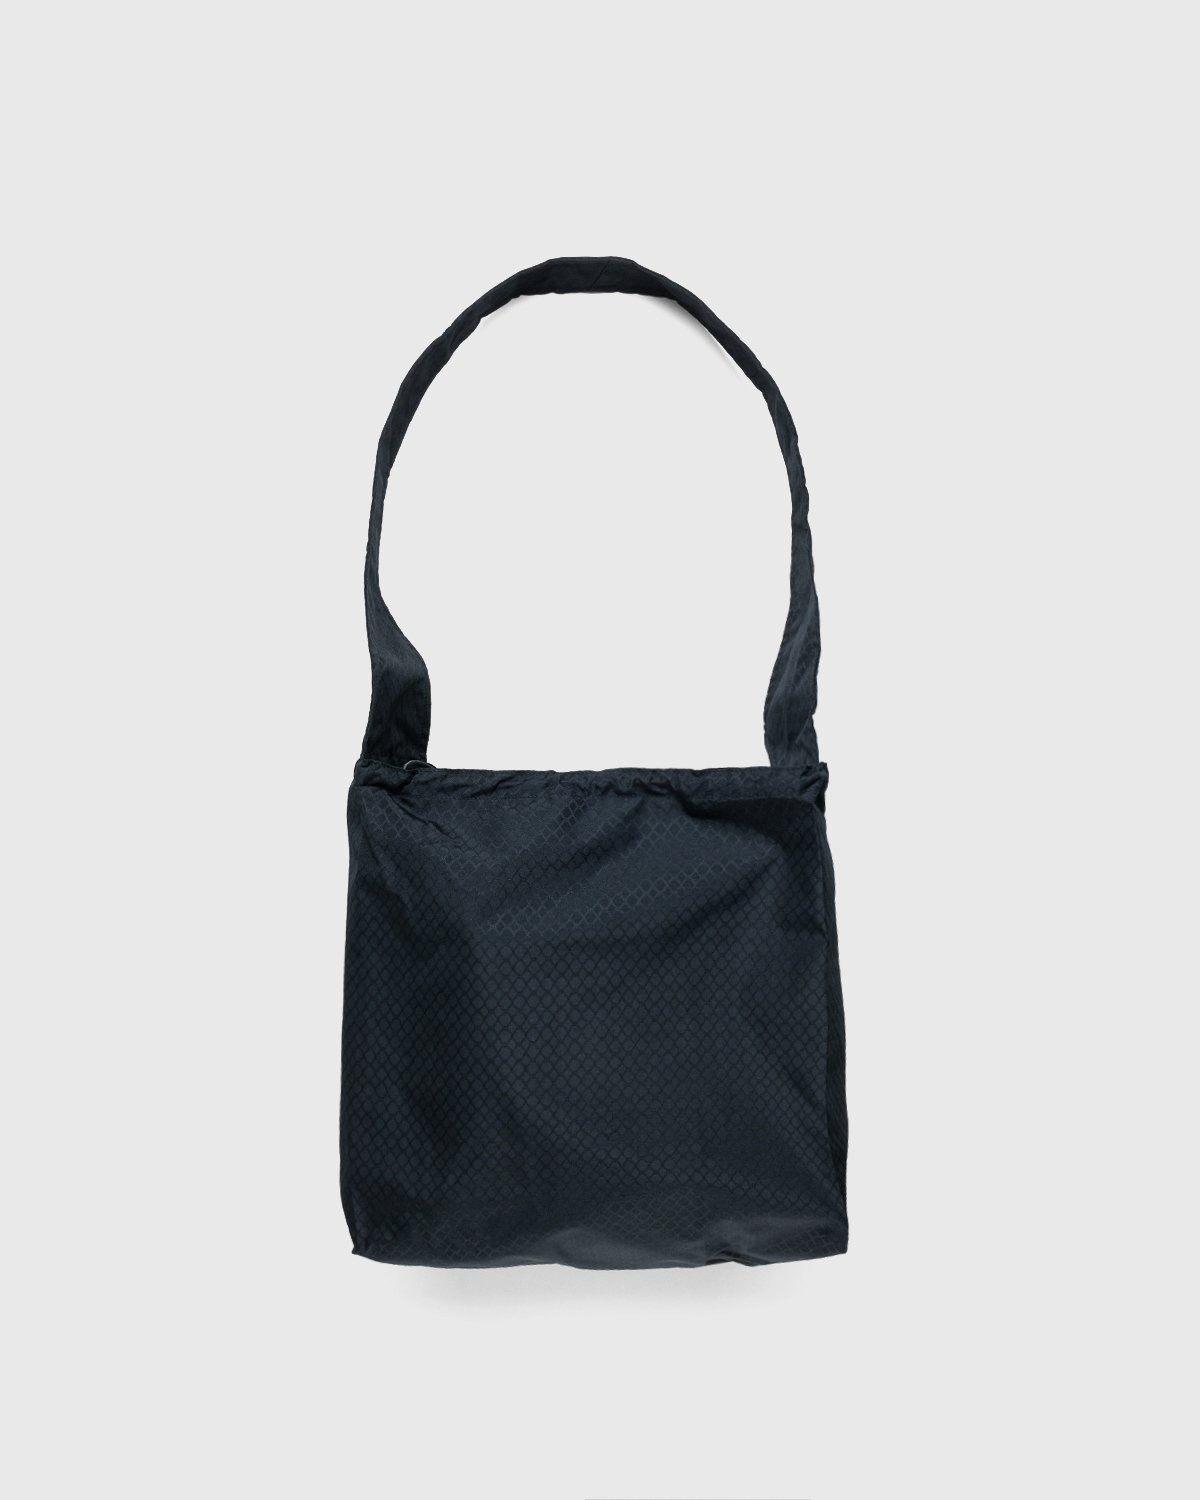 Patta - Diamond Packable Tote Bag Black - Accessories - Black - Image 2